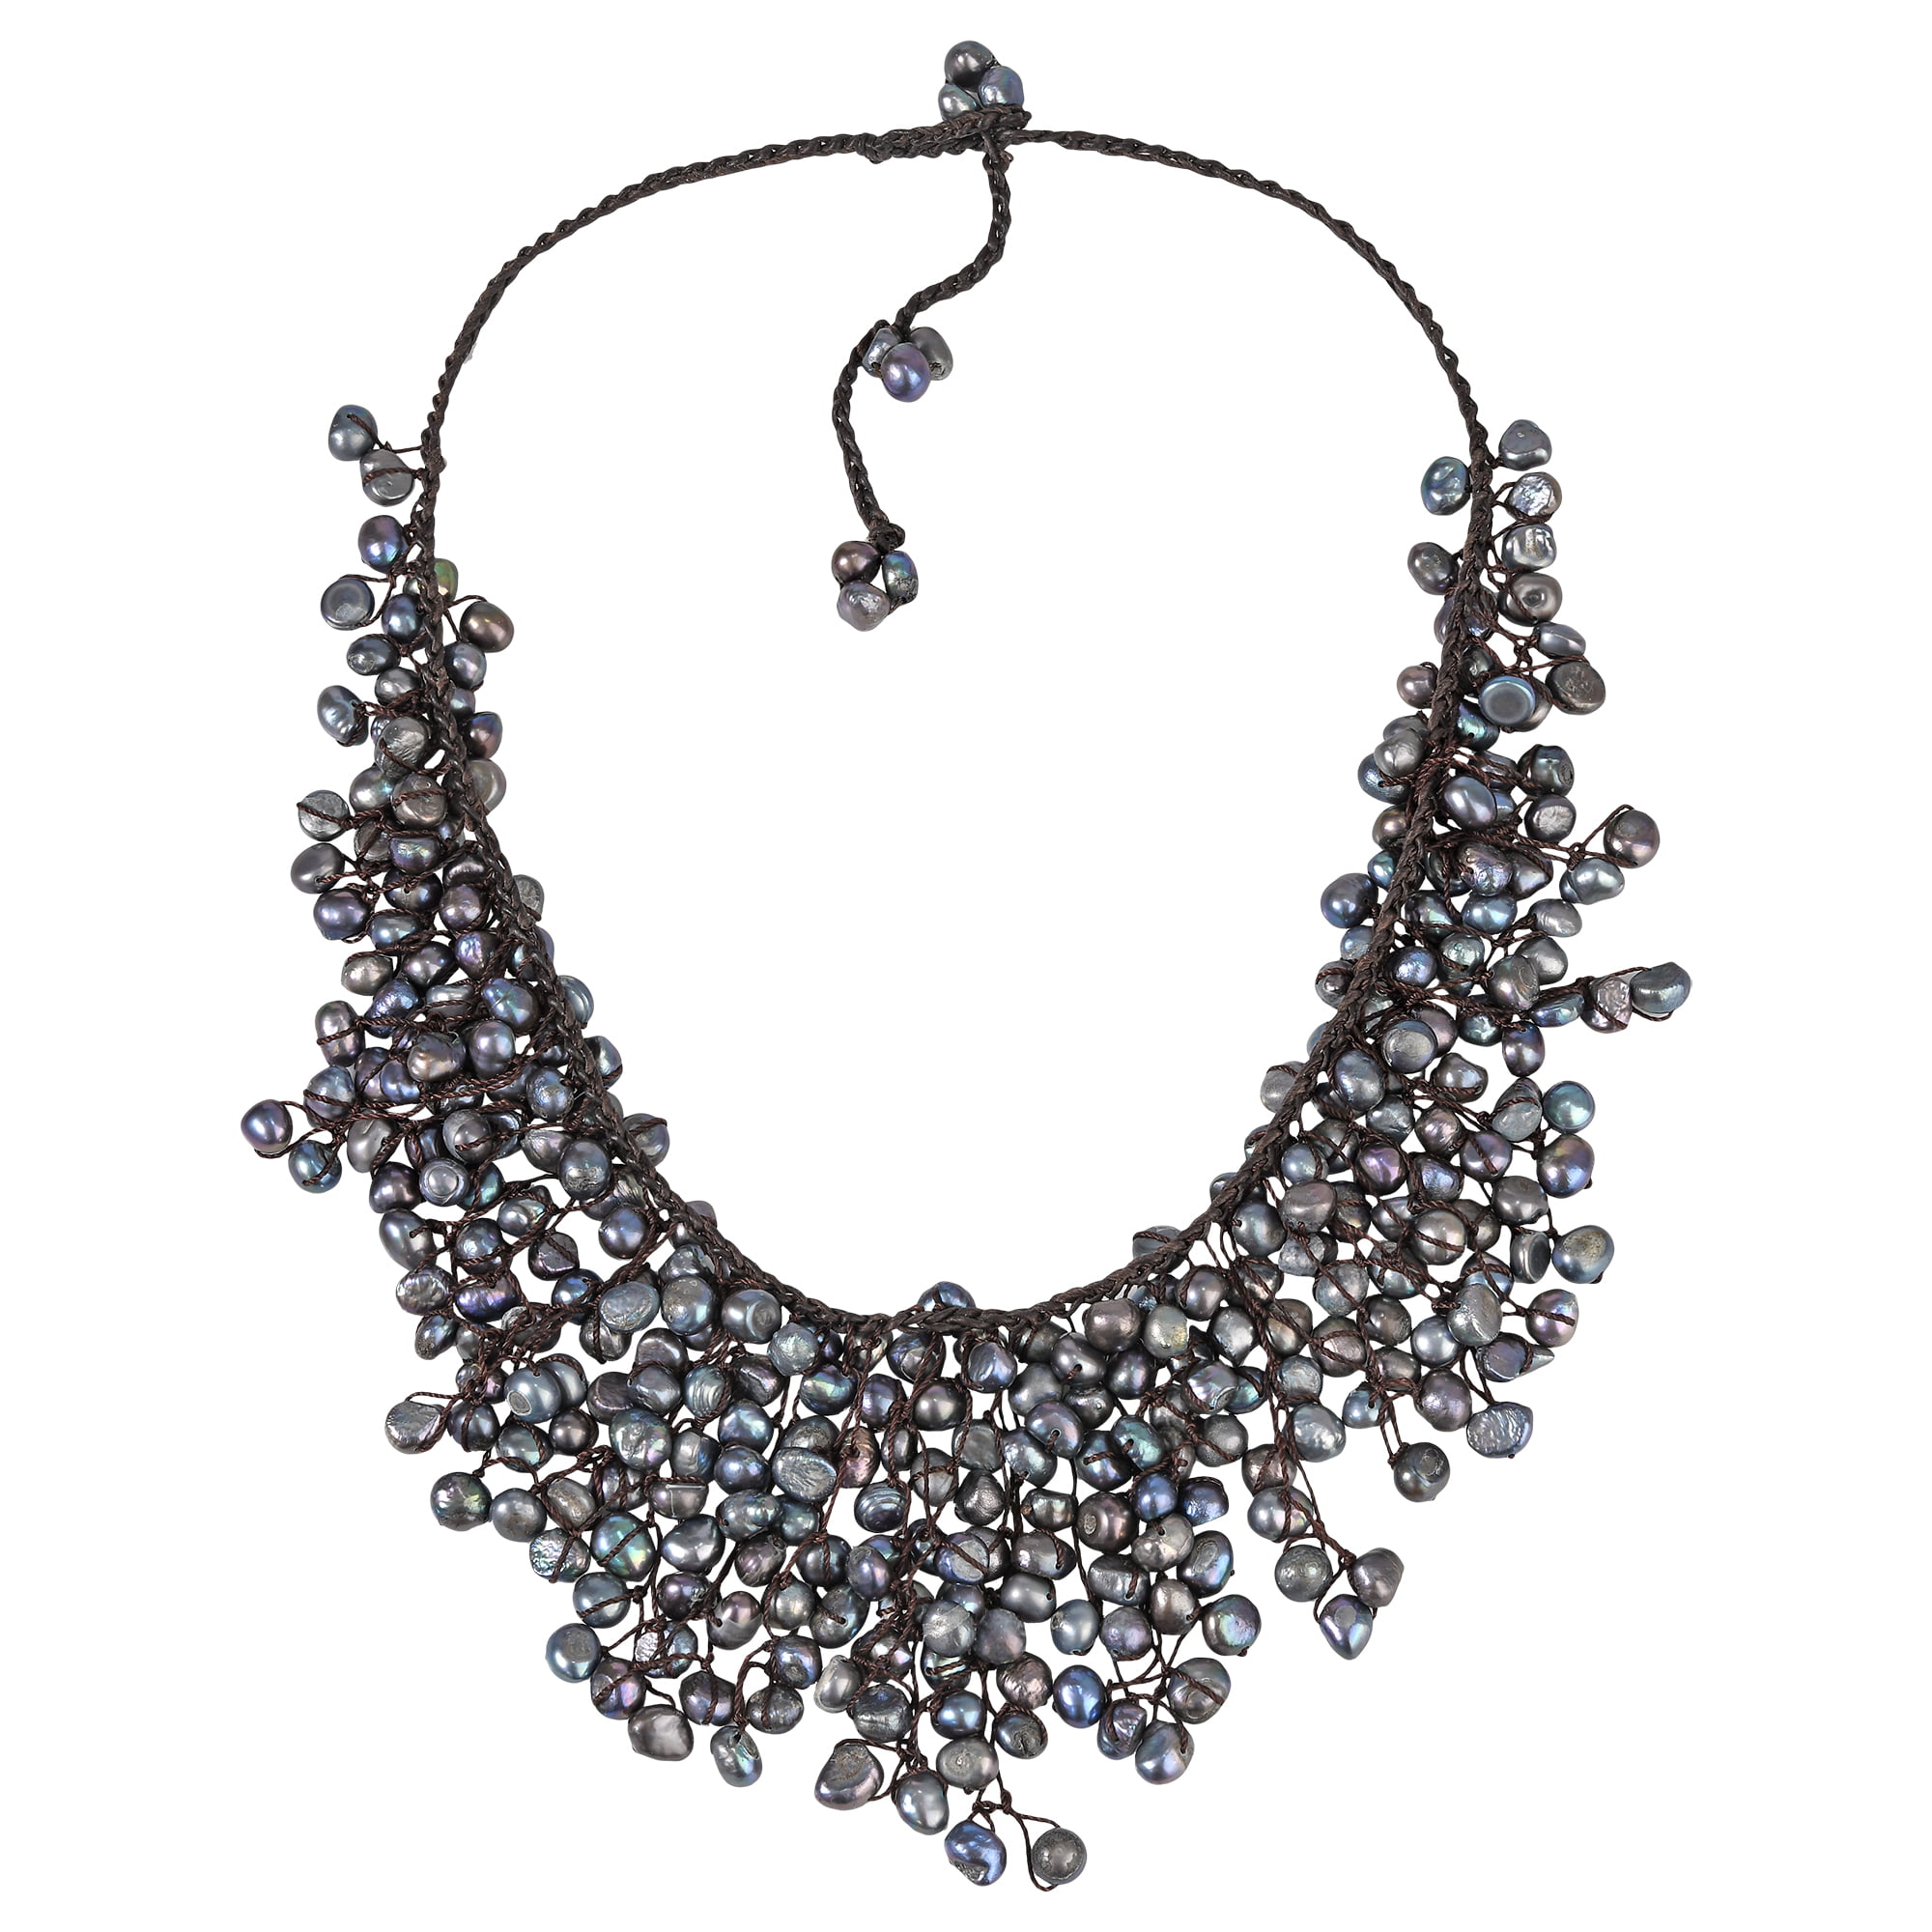 New age dainty accessory. bohemian Necklace Artisanal Handmade Blue Beach Glass Necklace boho,chic beachy